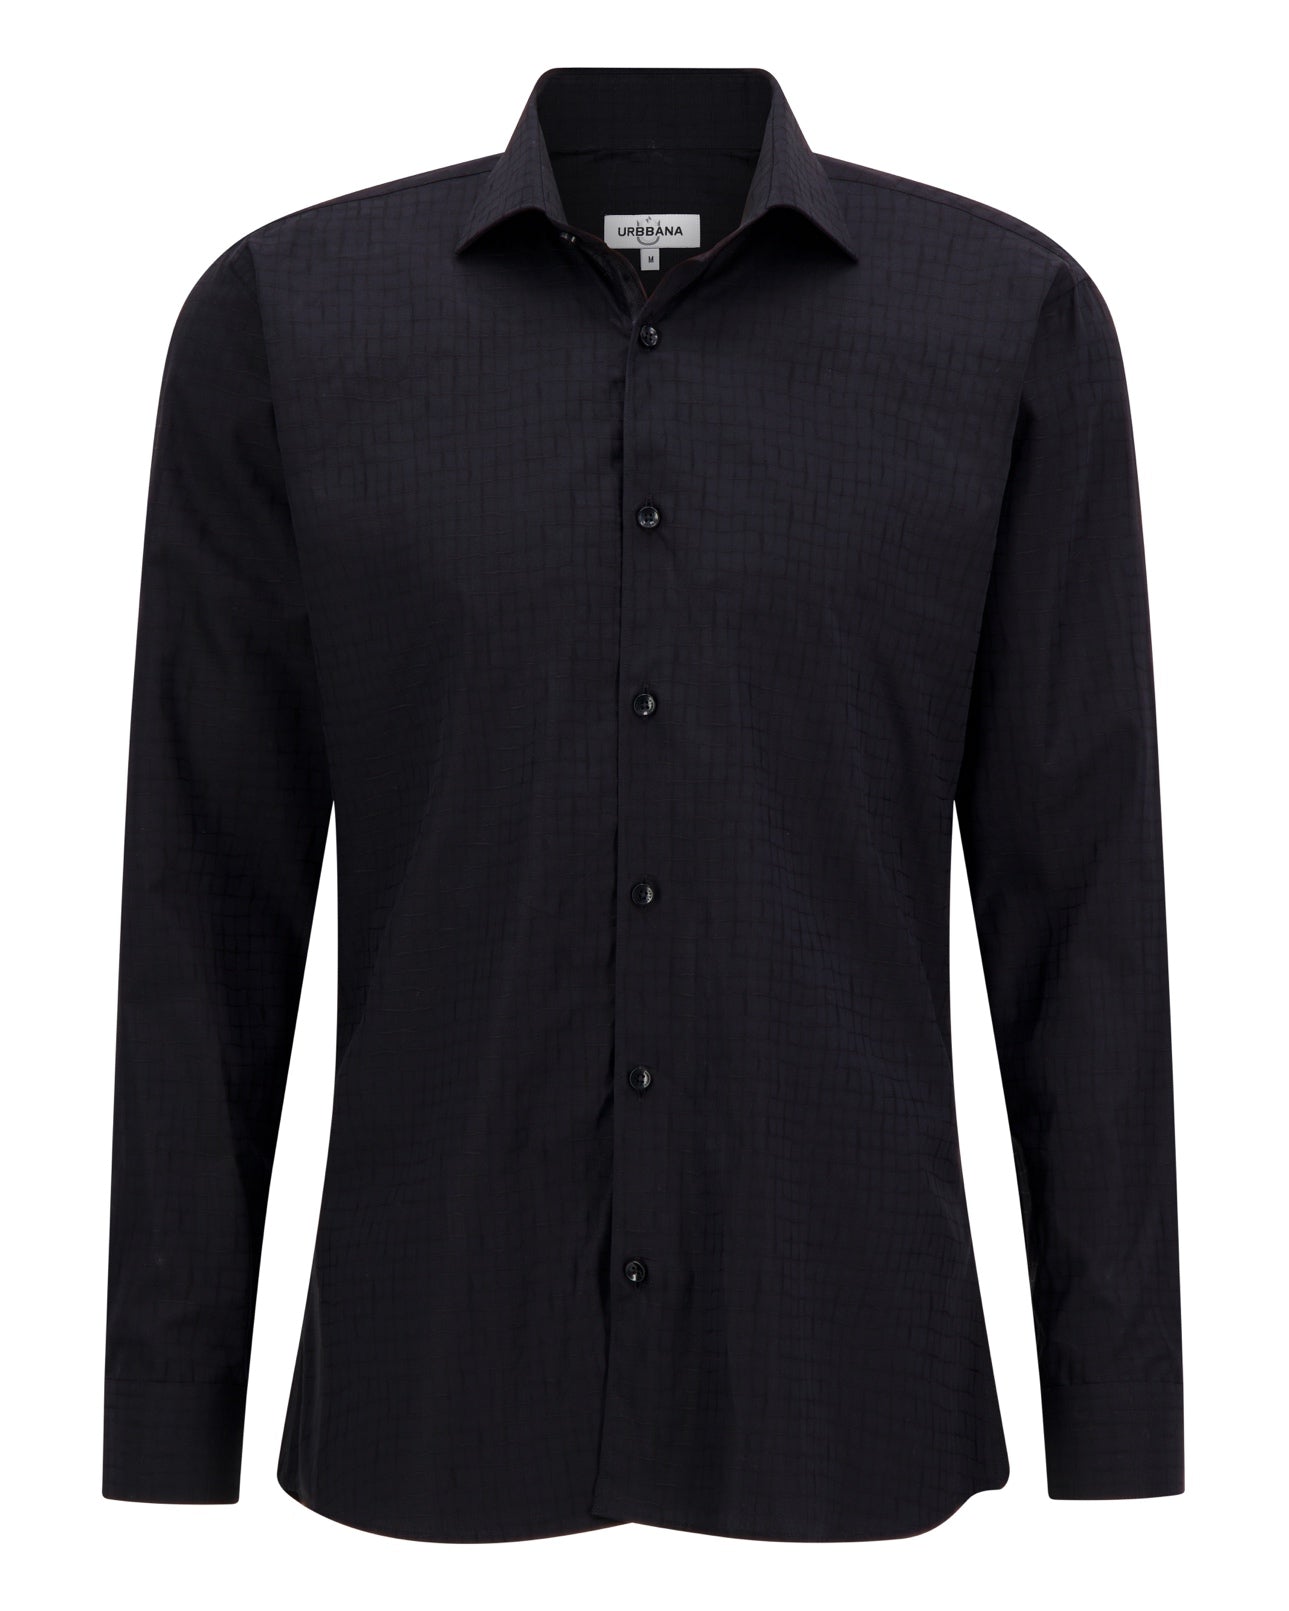 Croc Jacquard Shirt - Black